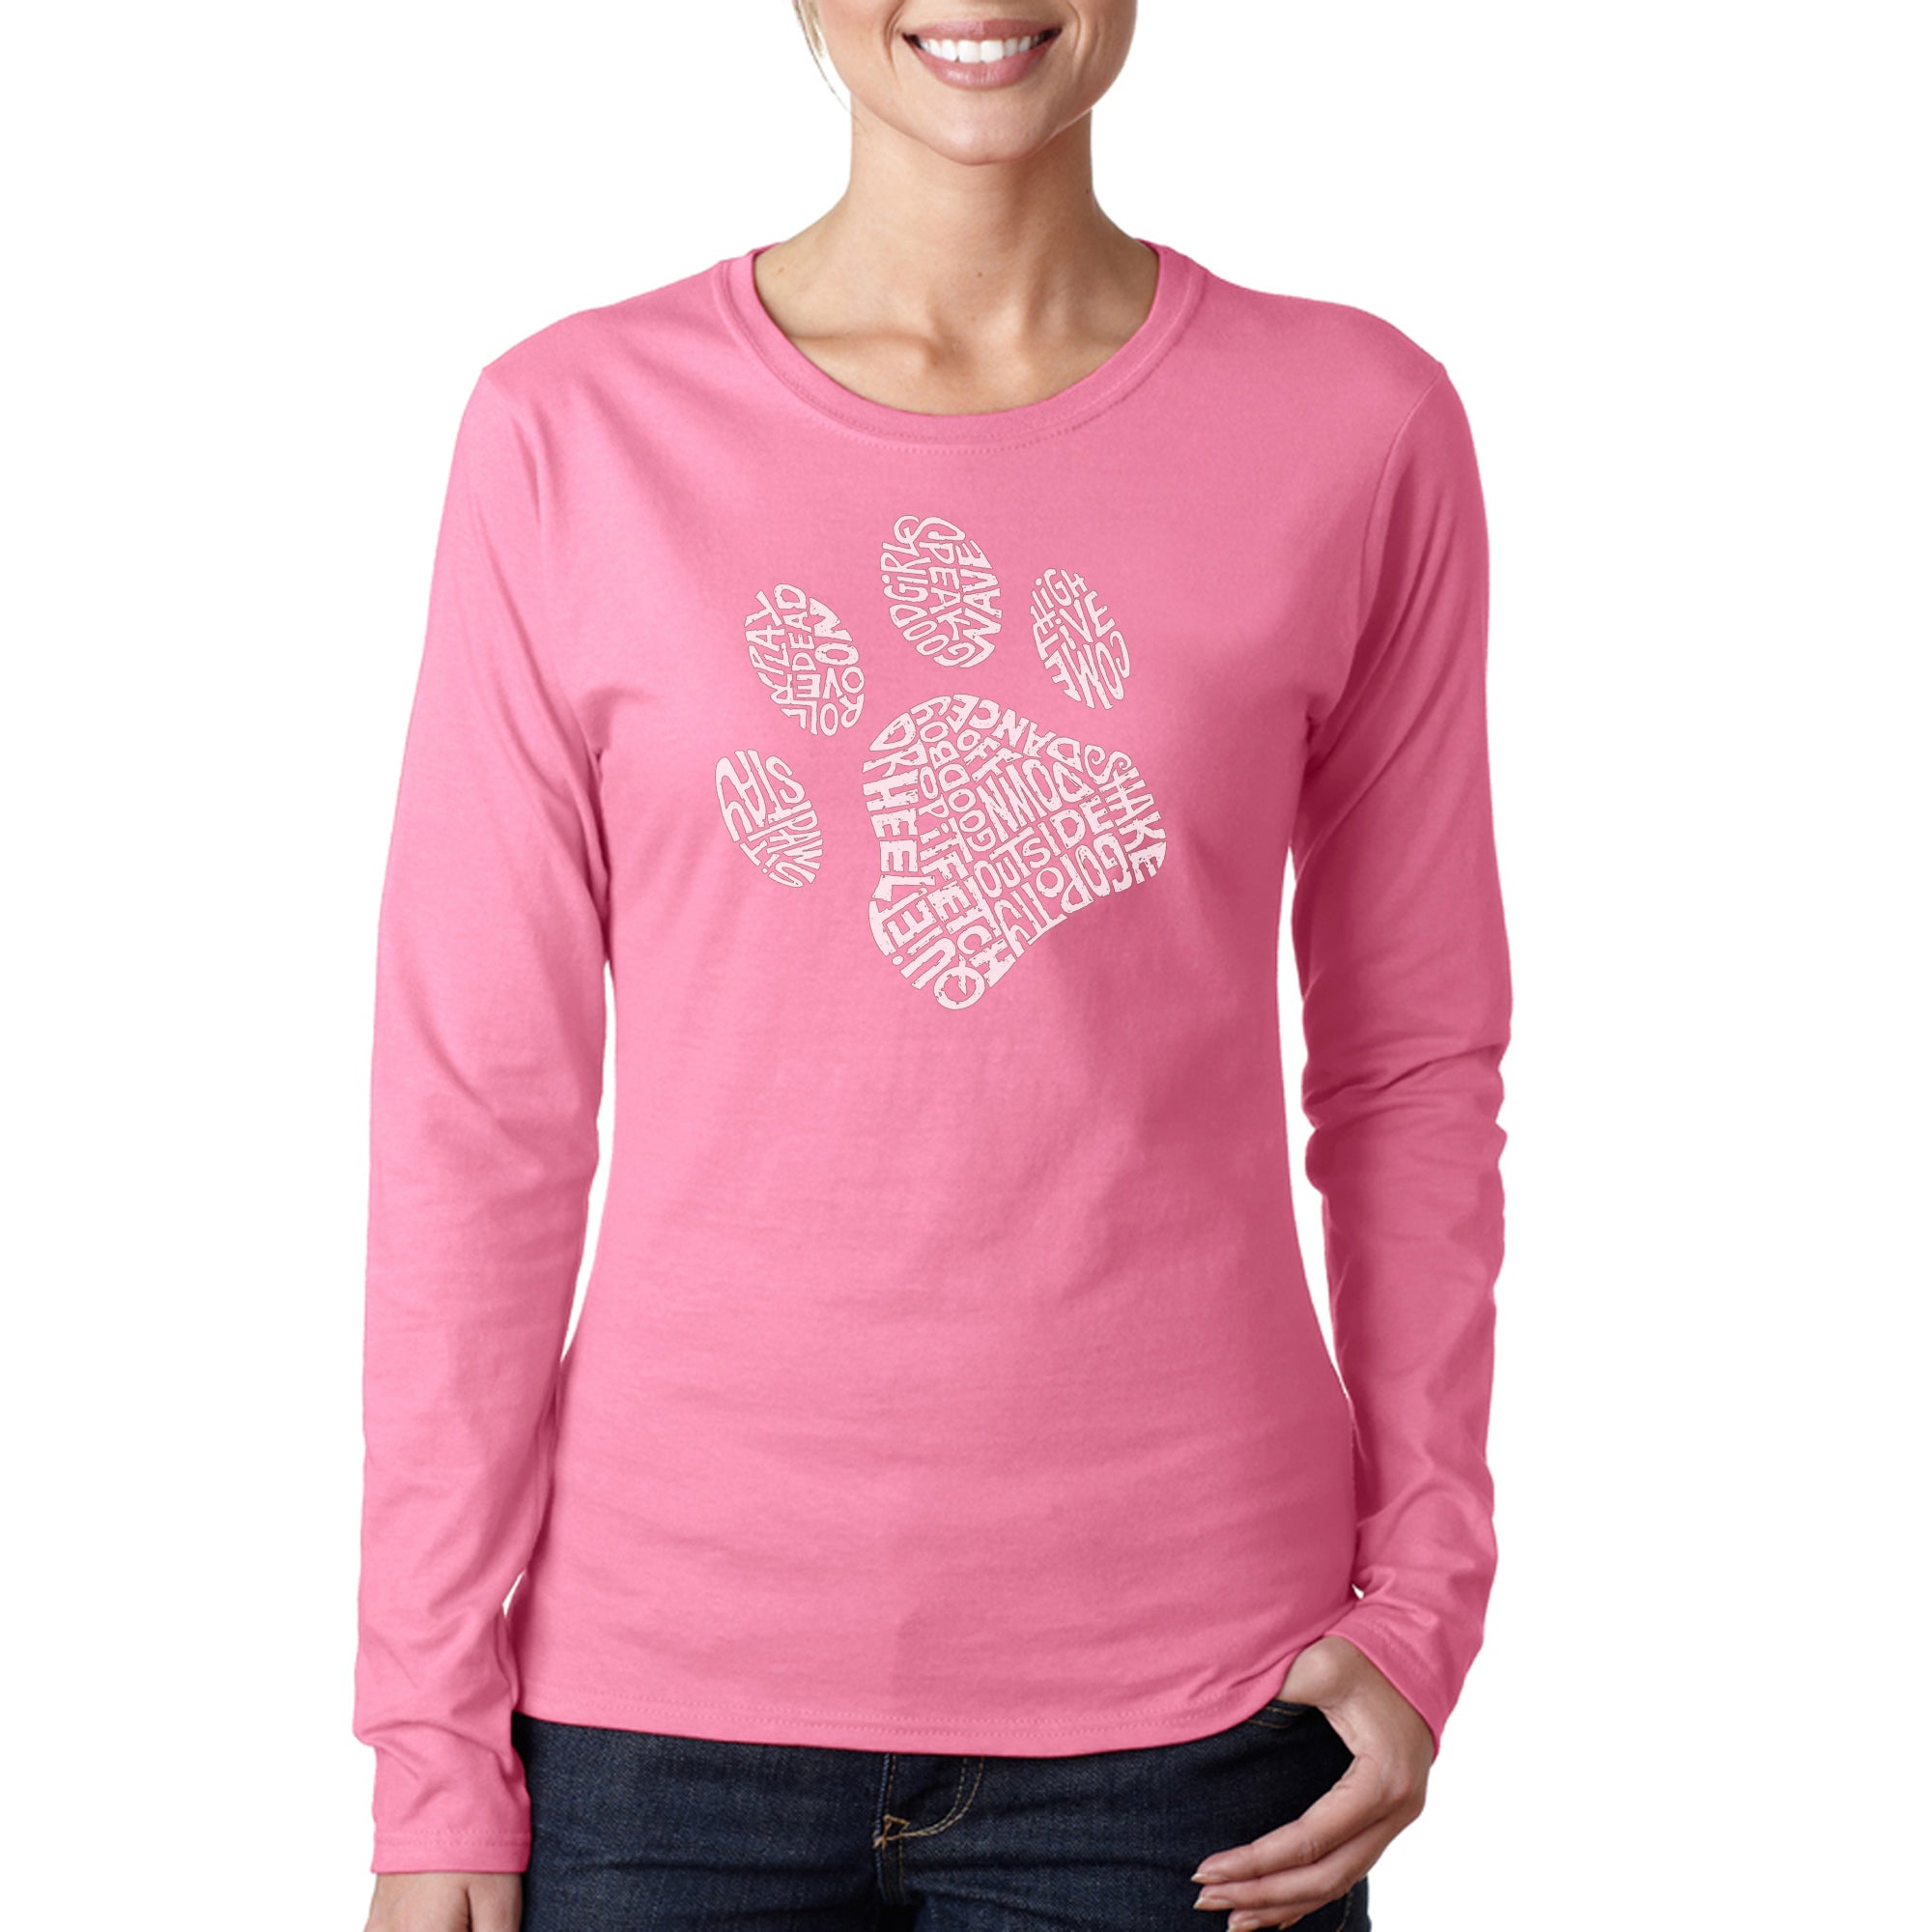 Dog Paw - Women's Word Art Long Sleeve T-Shirt - Pink - Small